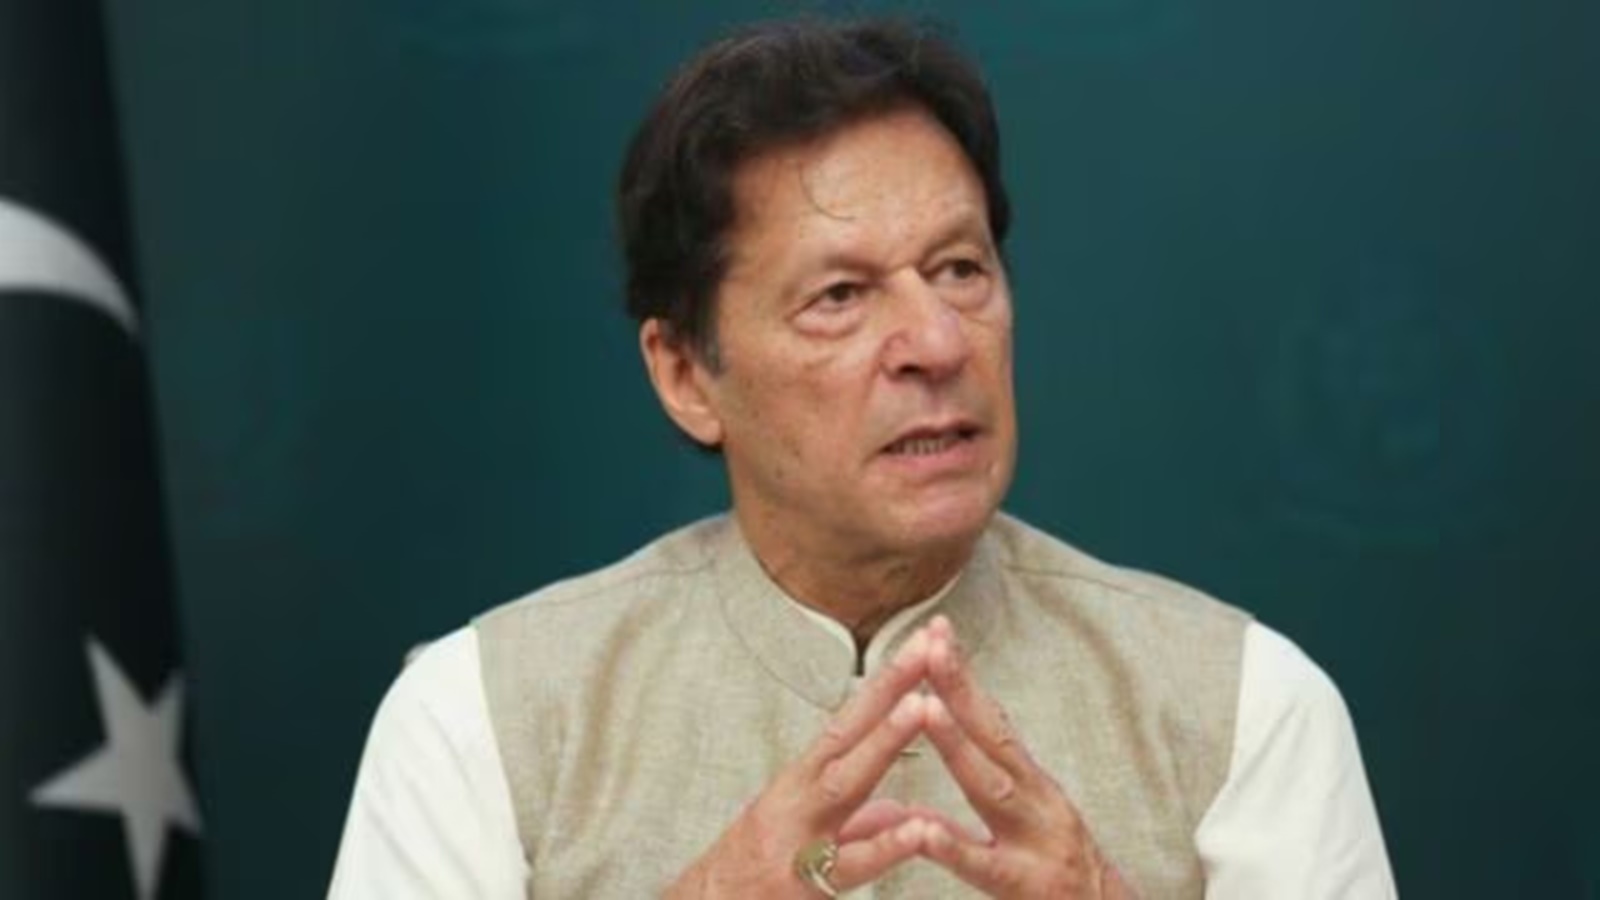 Detention of former Pakistani PM Imran Khan violates international law, says UN working group | Pakistan News